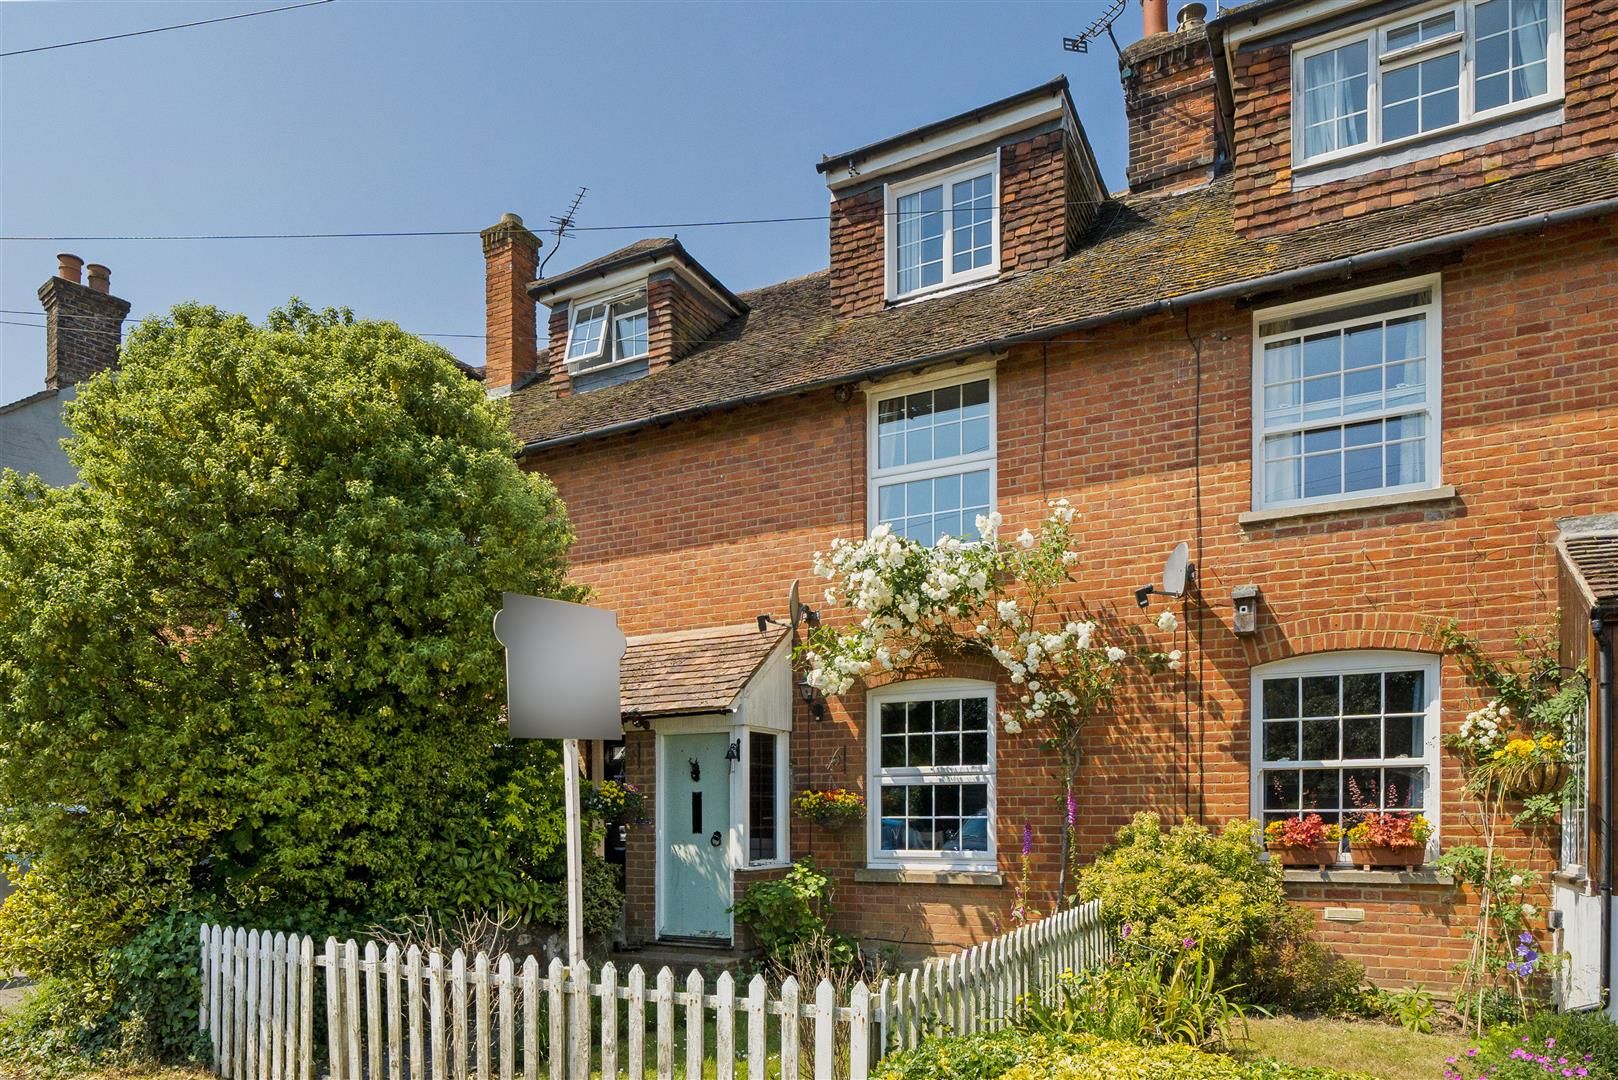 Dawsons Cottages, The Green, West Farleigh, Maidstone, ME15 0NN